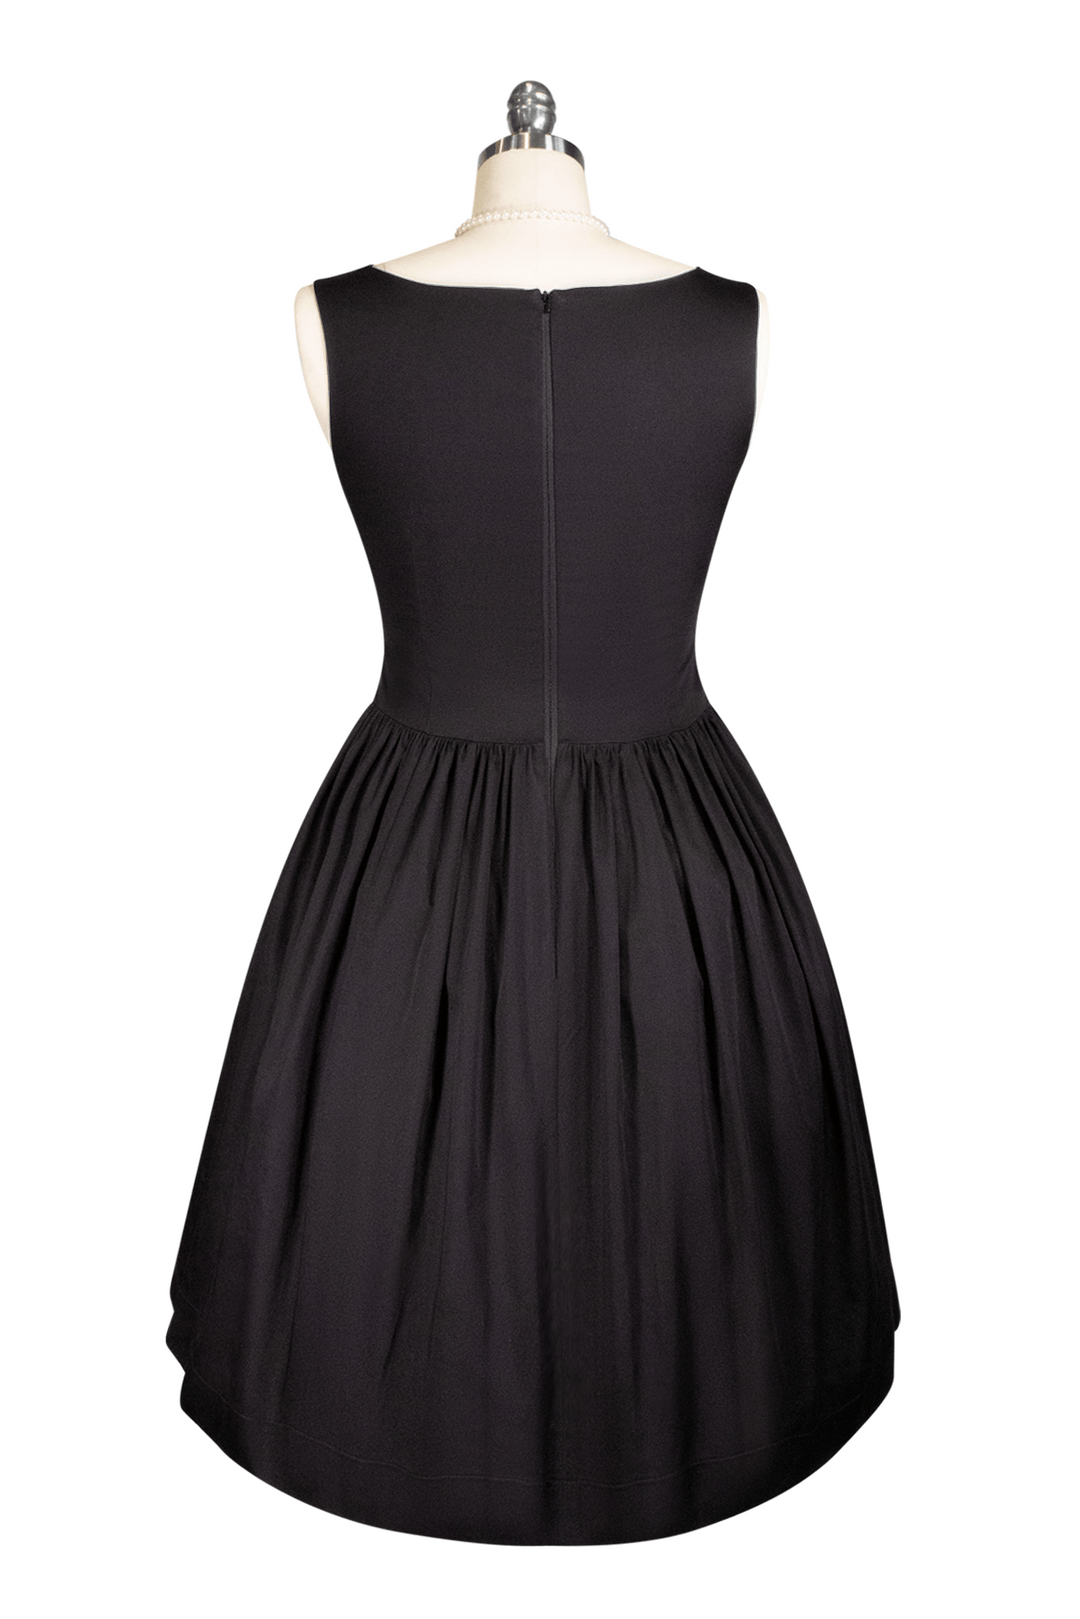 Tea Rose Classic Dress (Black) - Kitten D'Amour